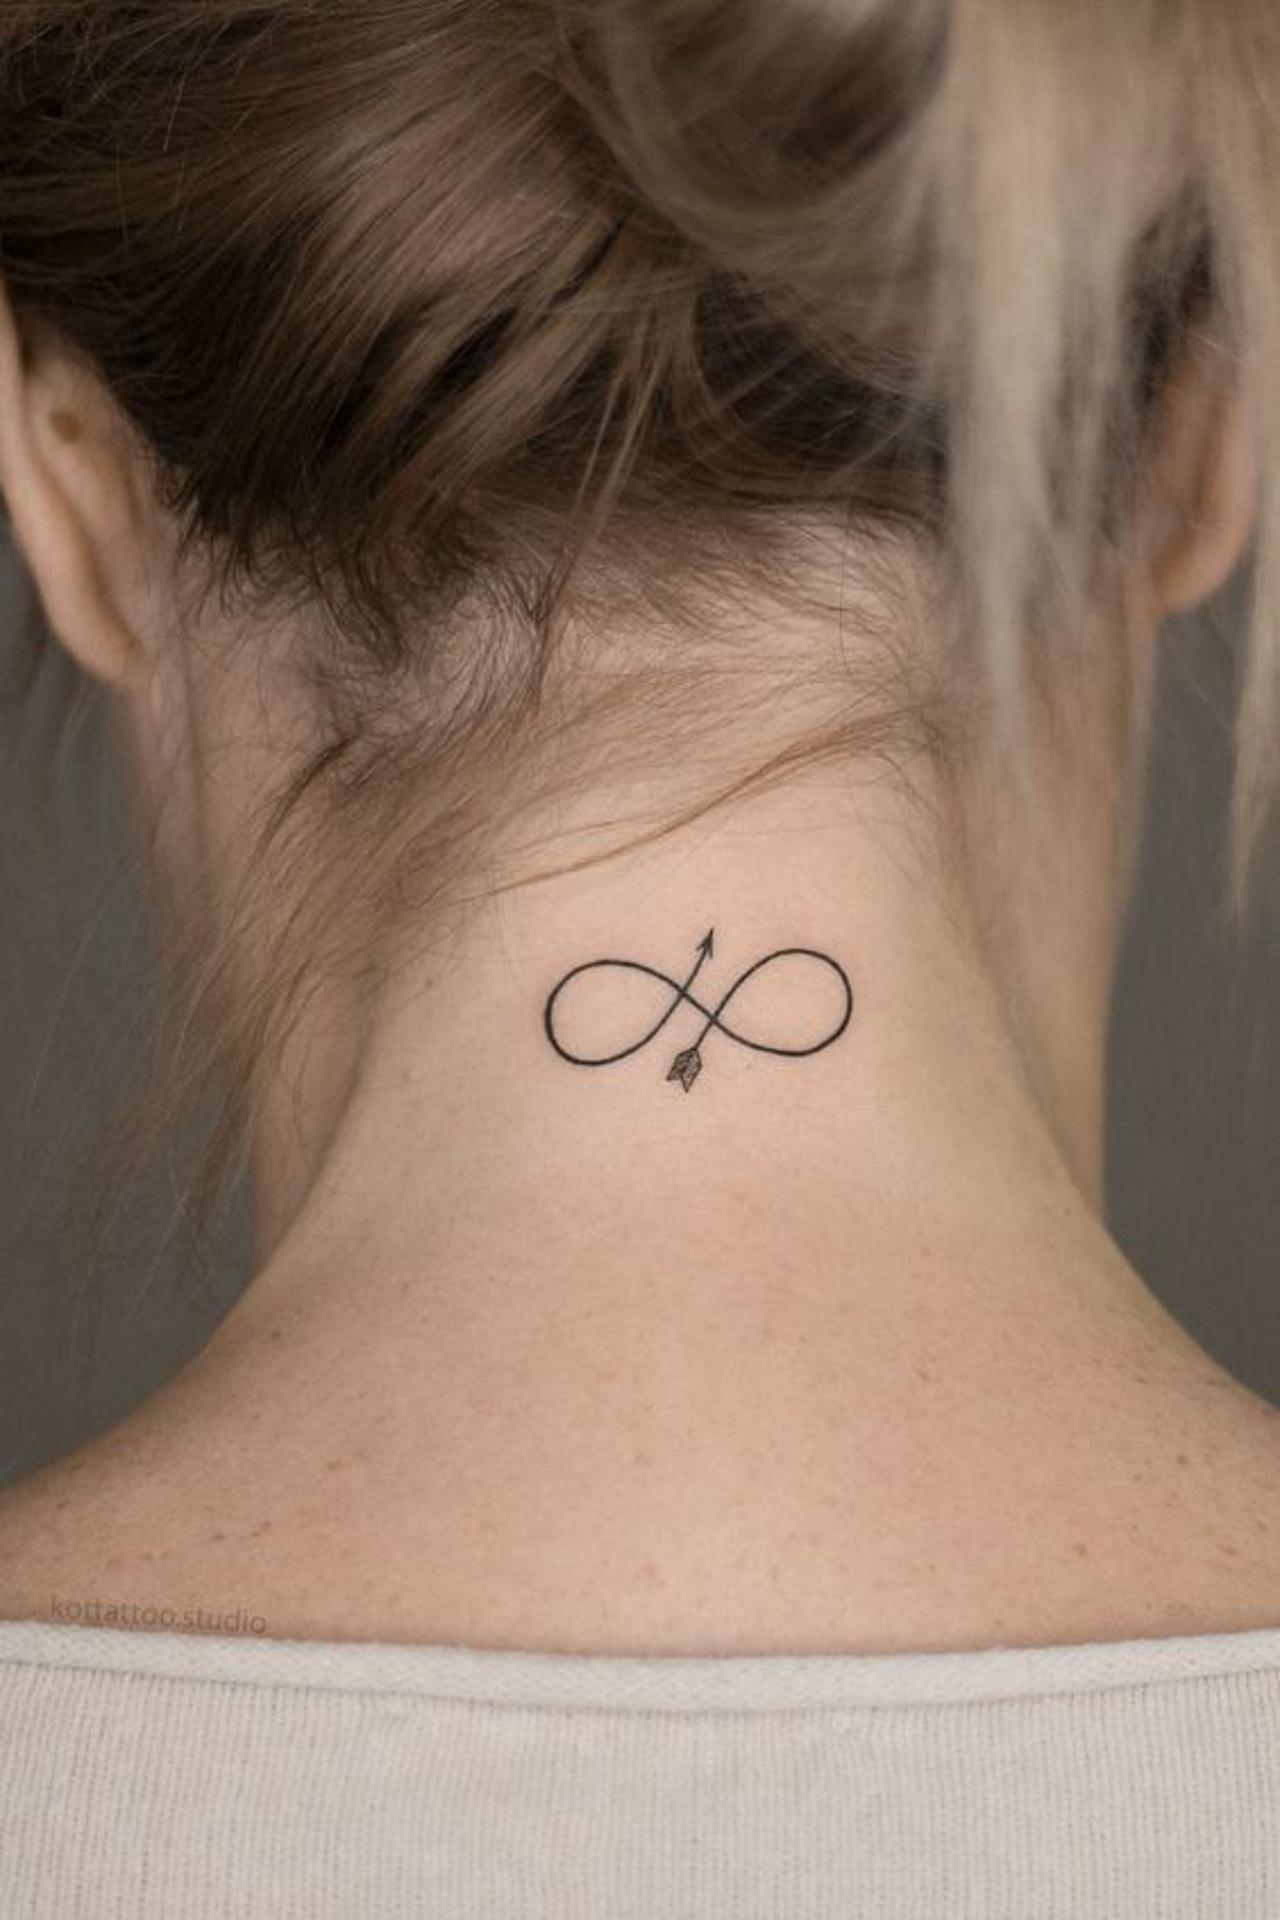 tatuajes infinito